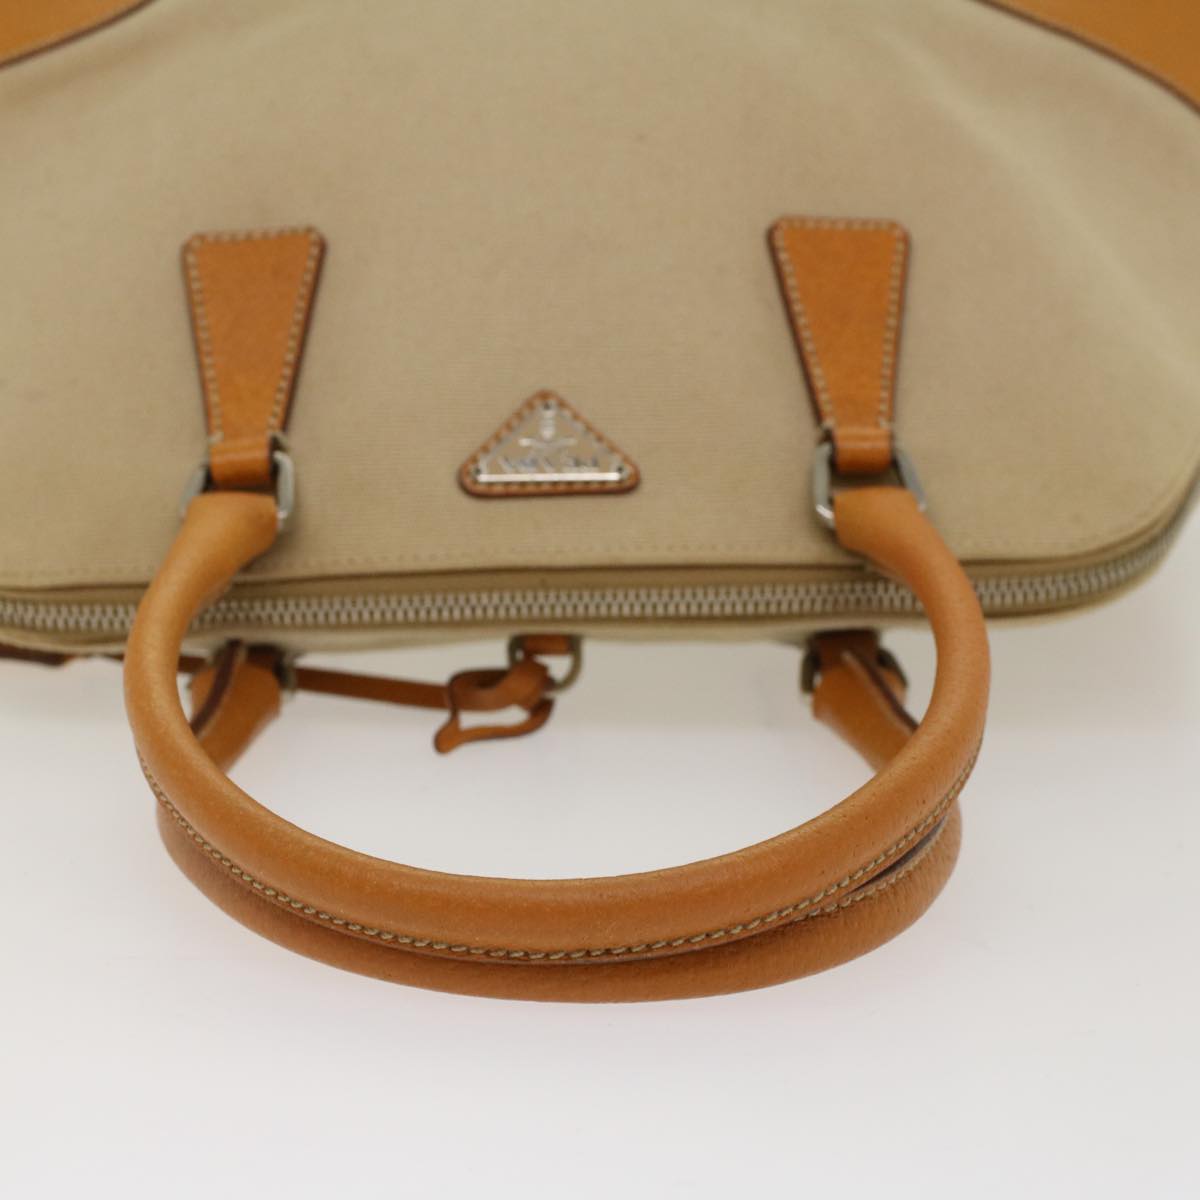 PRADA Hand Bag Canvas Leather Beige Auth bs7557